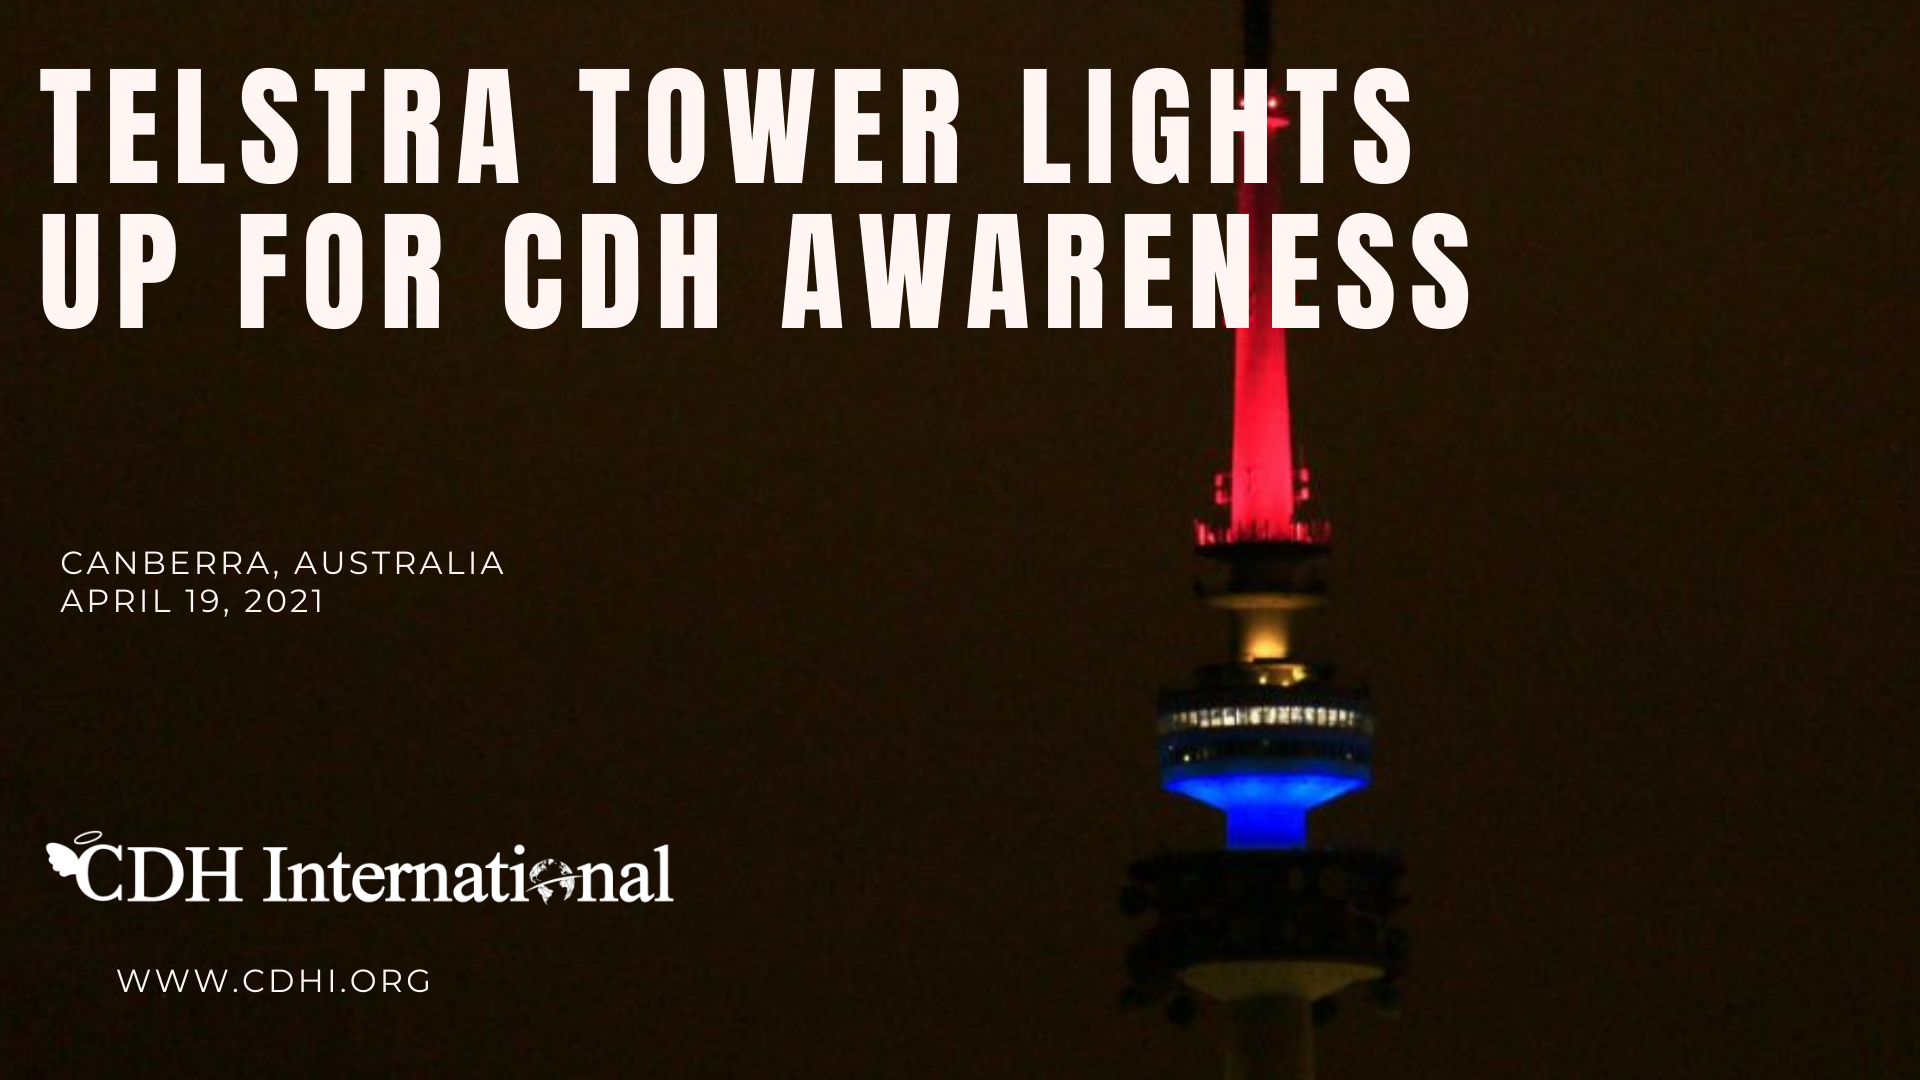 Bolte Bridge Lights Up For CDH Awareness